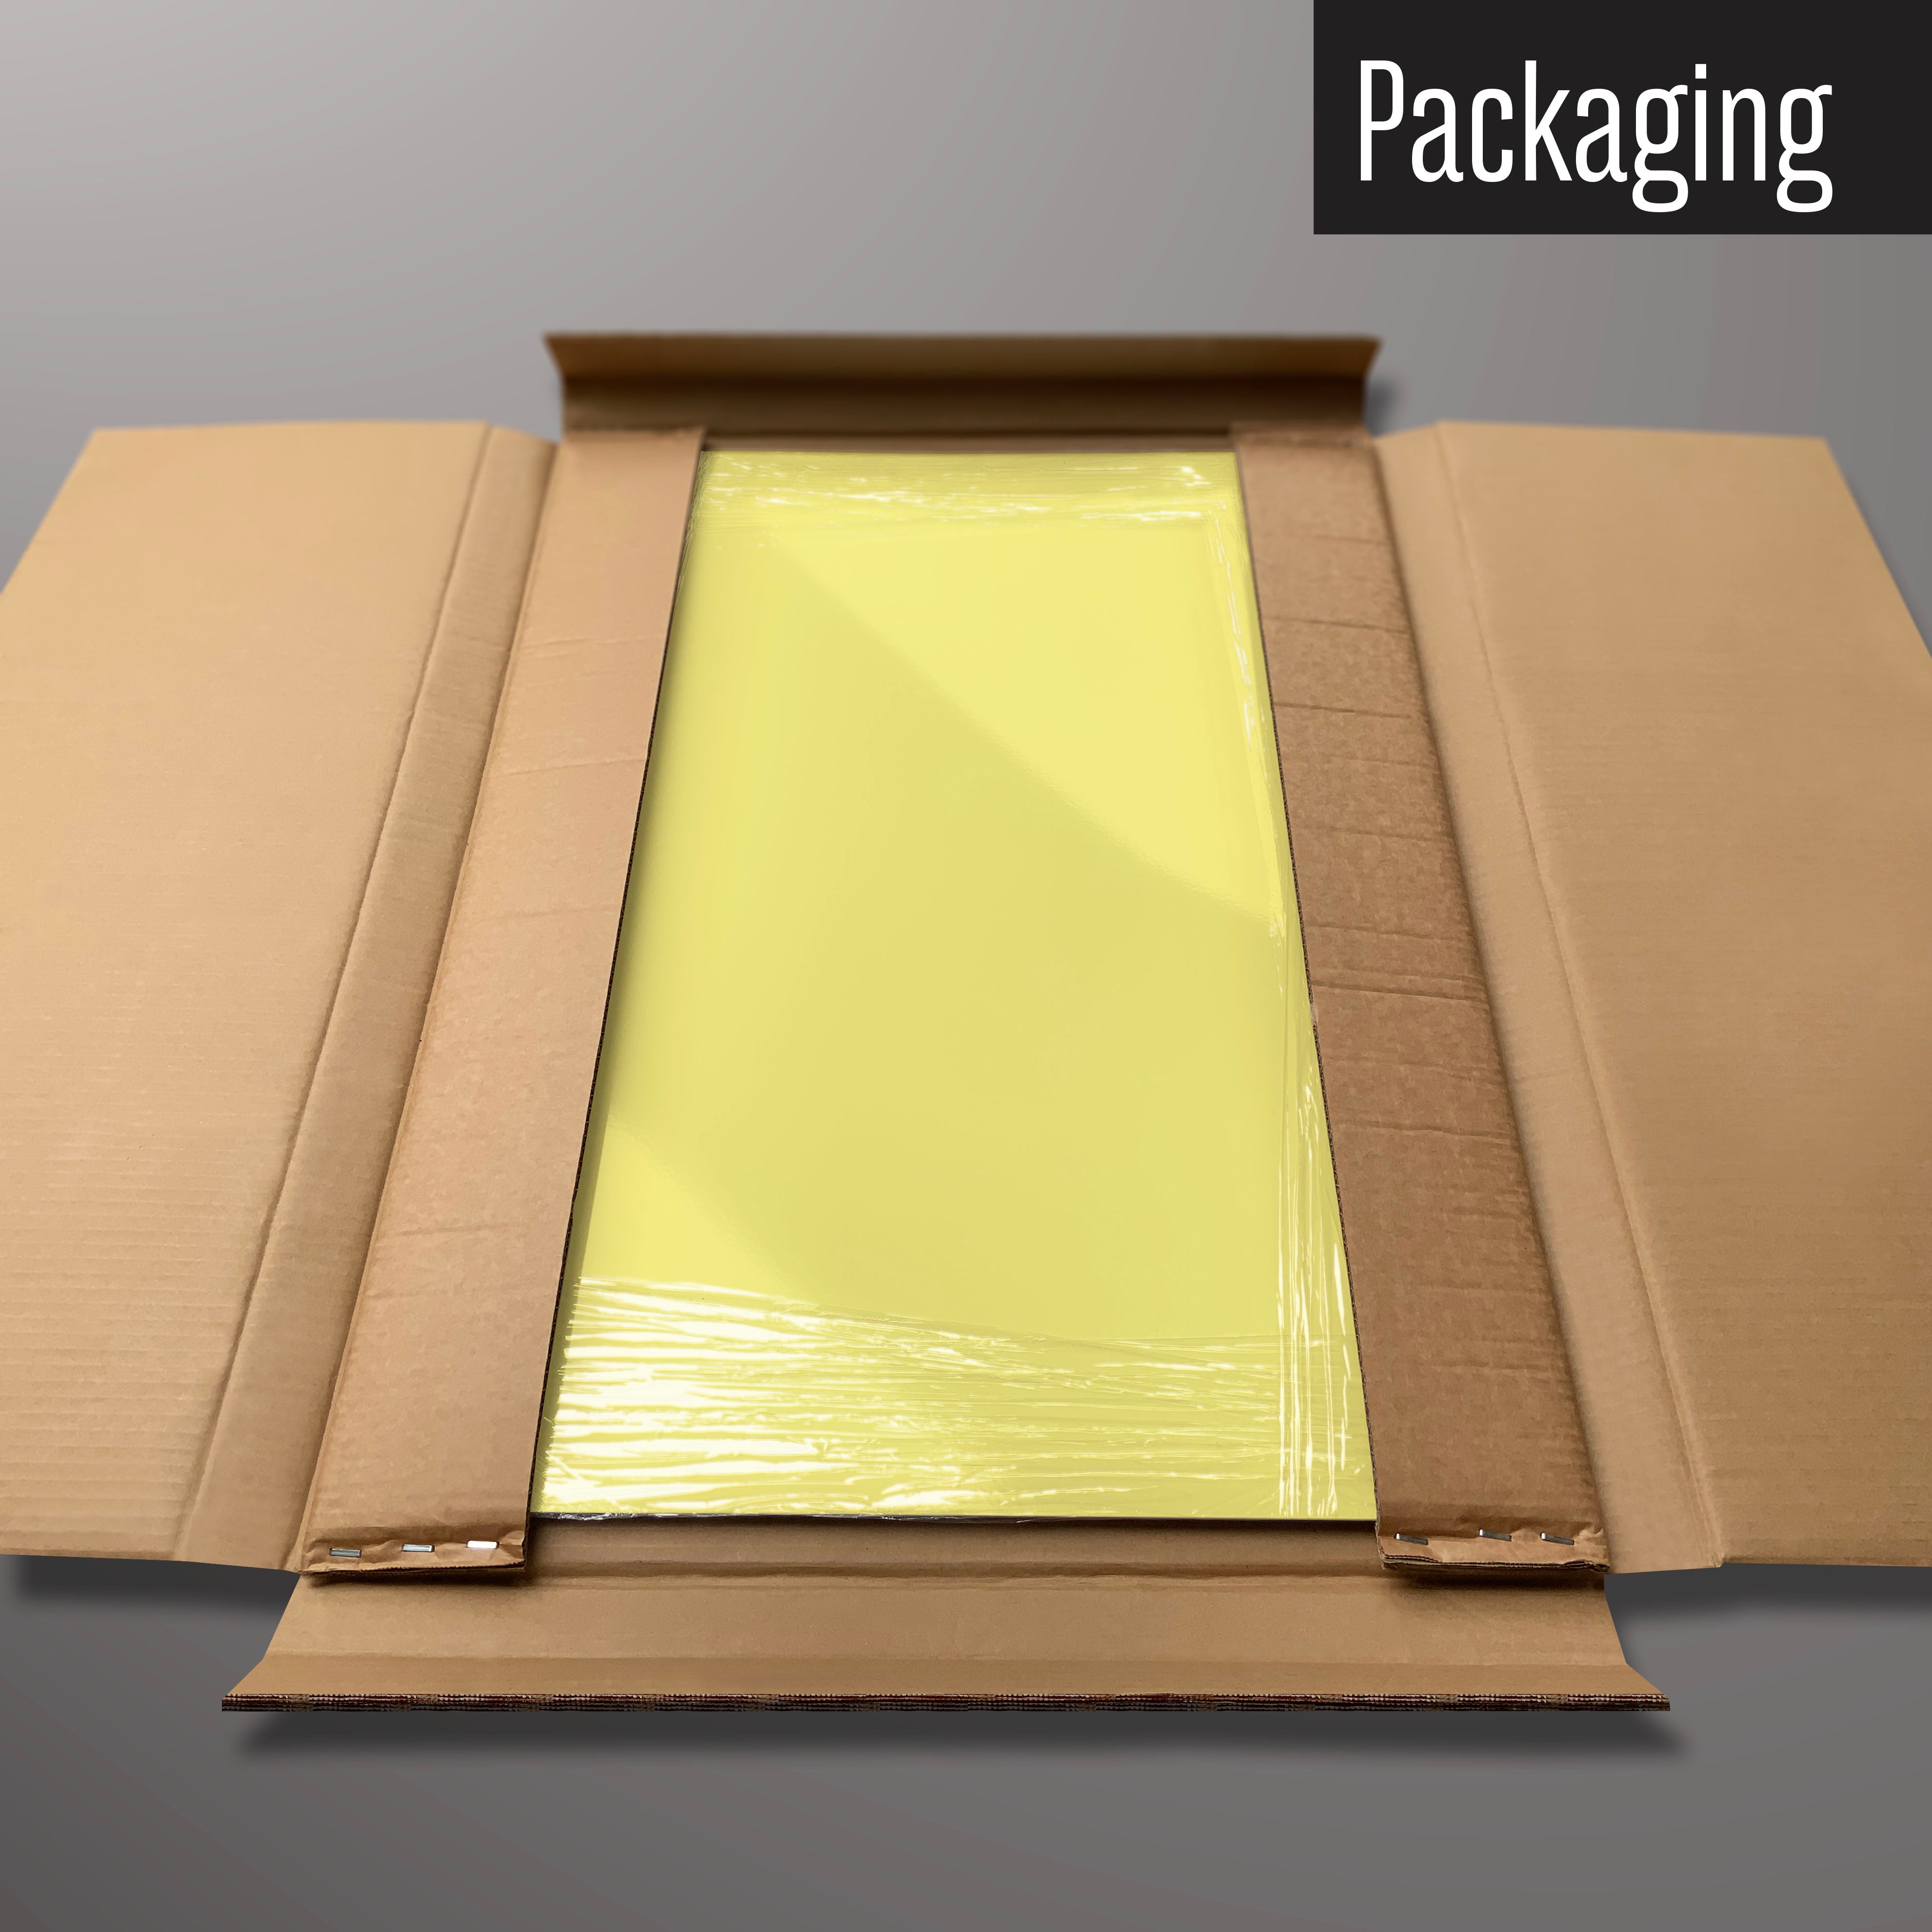 A plain yellow magnetic board in it’s cardboard packaging